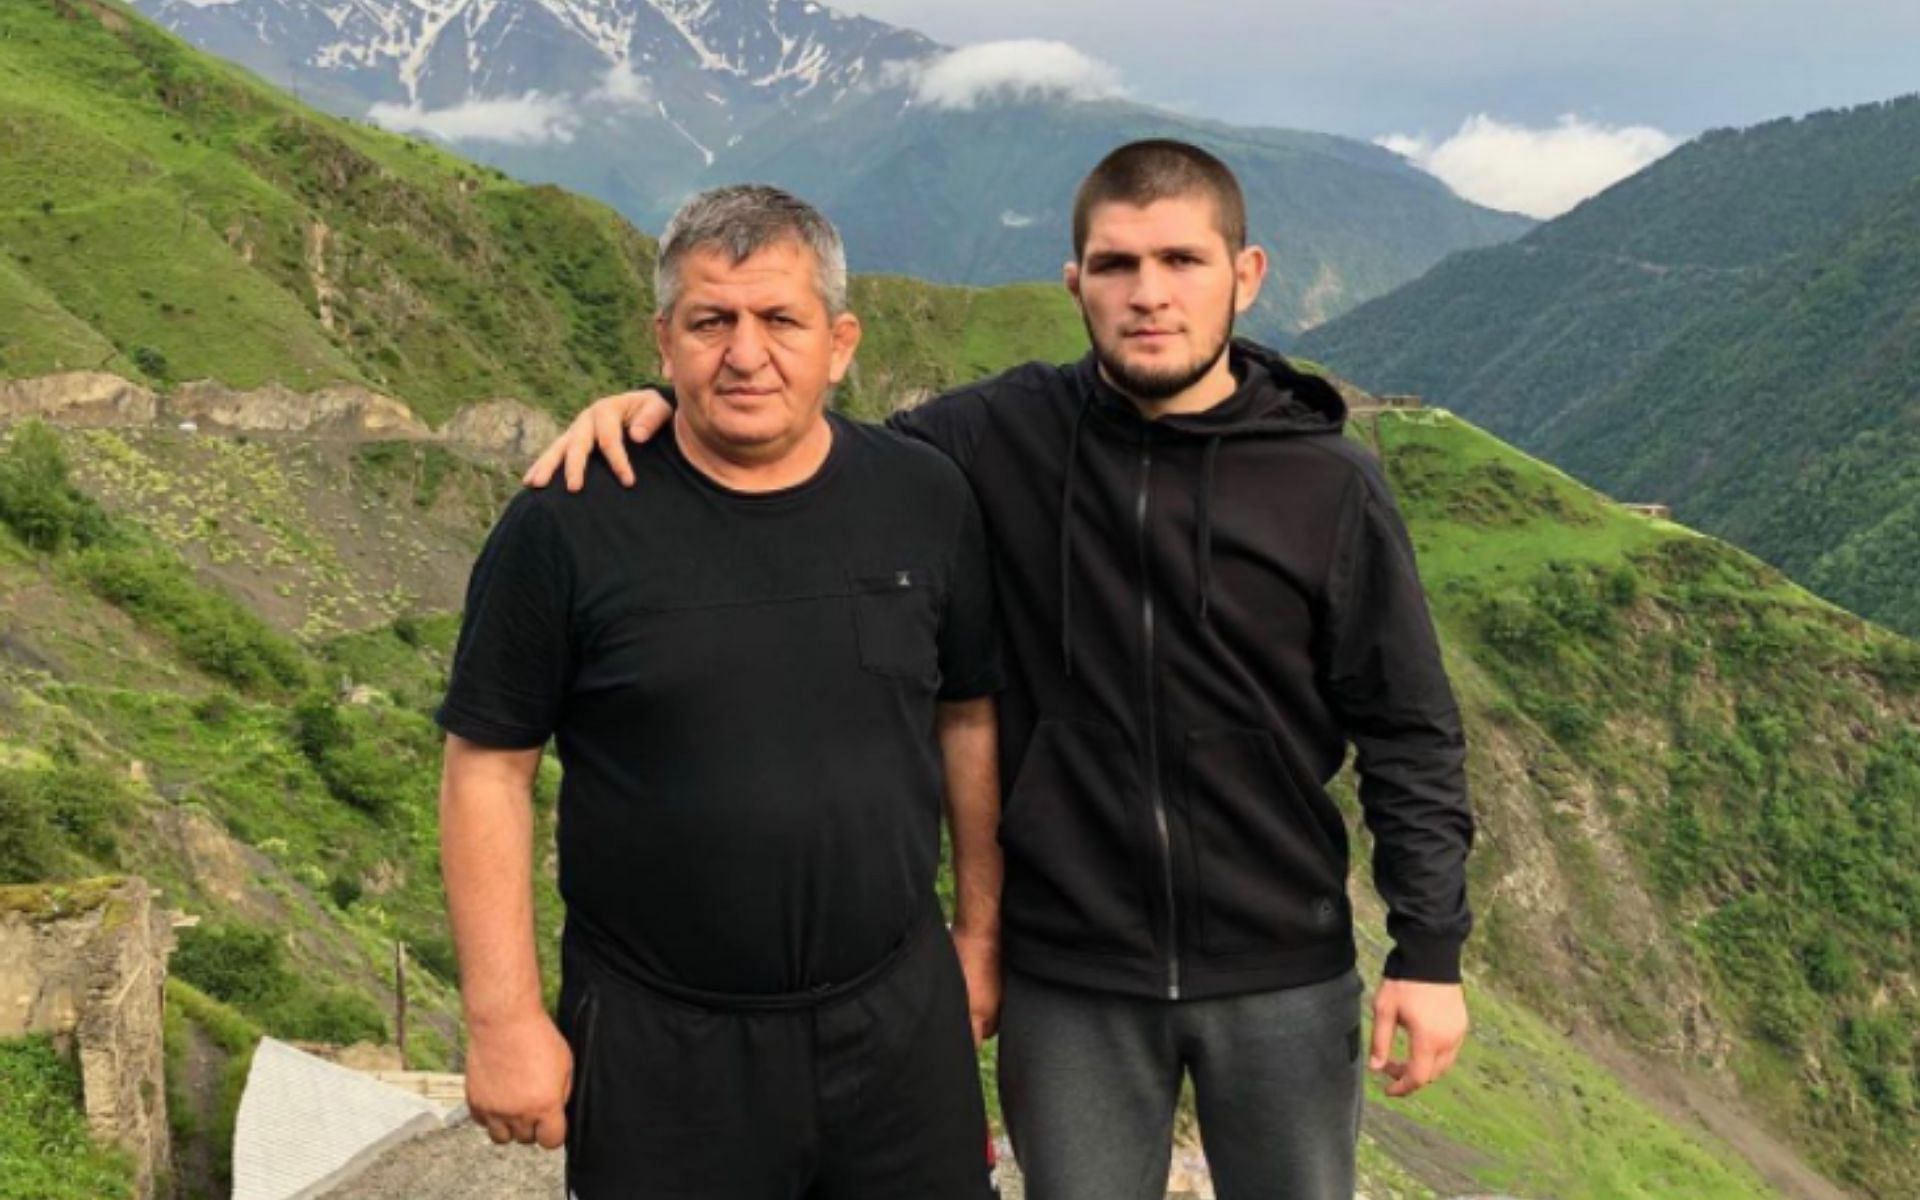 Khabib (left) and Abdulmanap Nurmagomedov [Picture Credit: @khabib_nurmagomedov on Instagram]